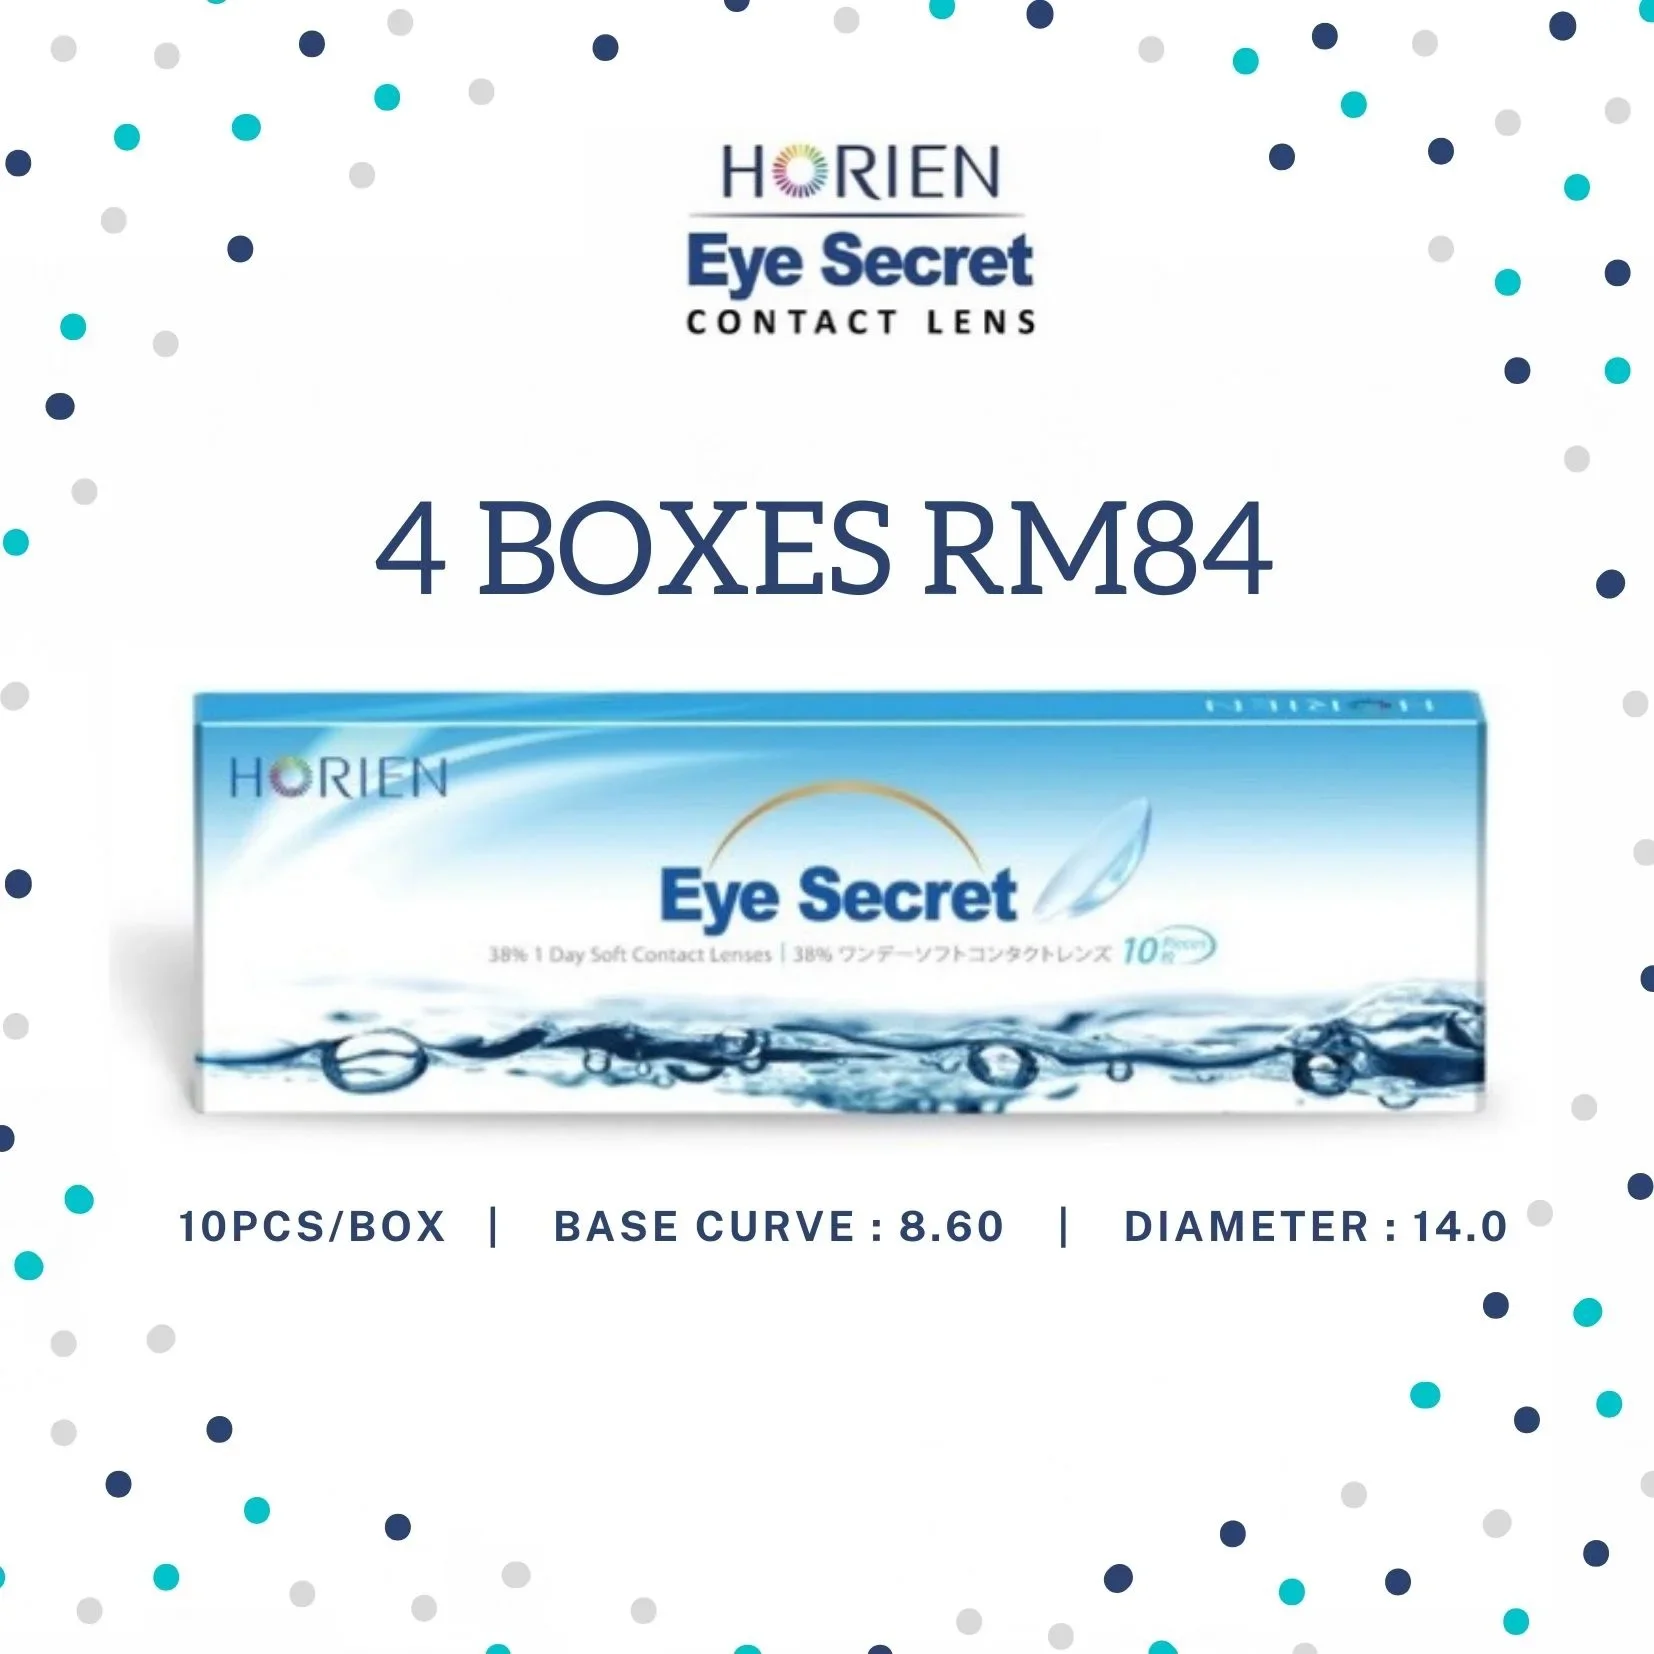 Horien Eye Secret Daily Disposable Contact Lenses 10PSC/Box